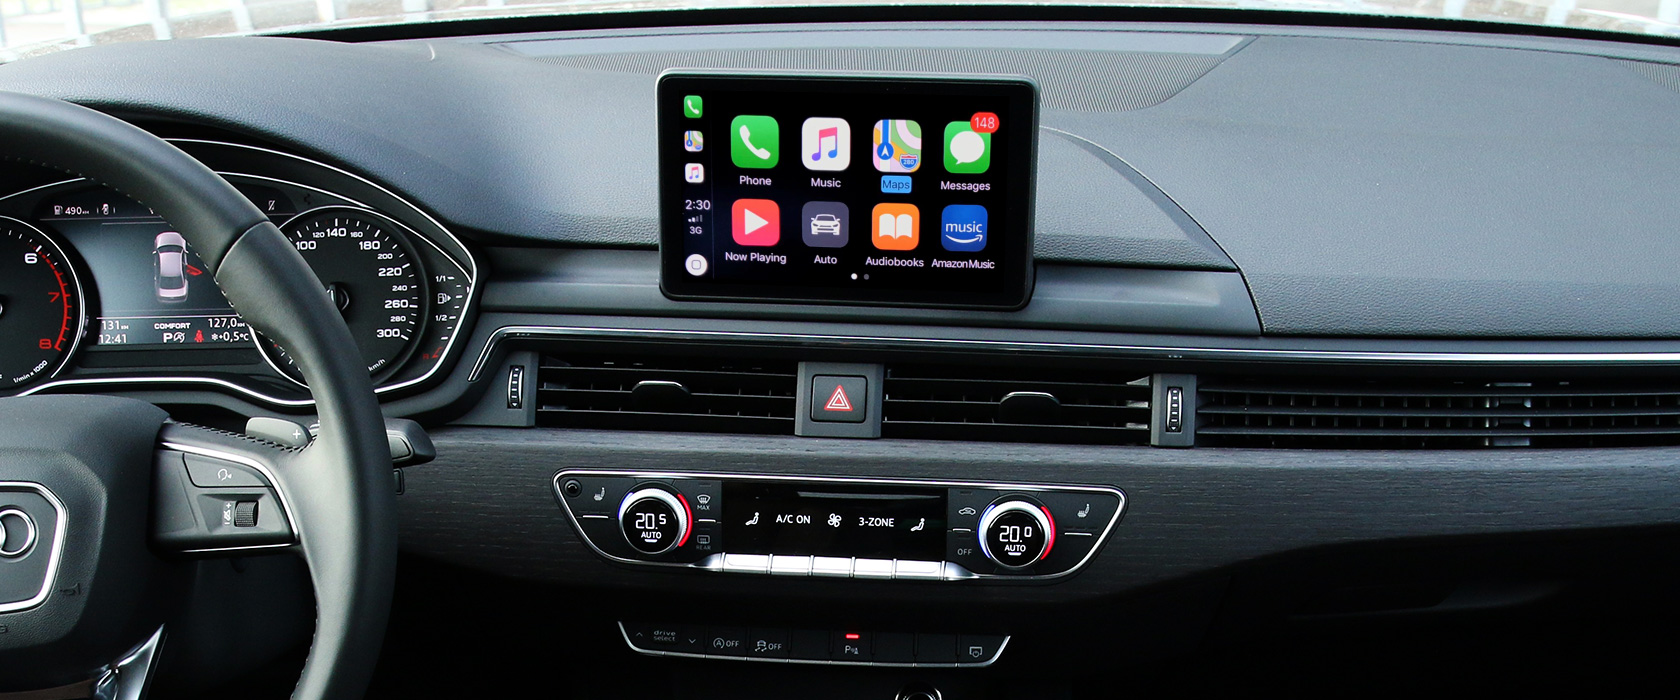 Audi Wifi Carplay Android Auto Mirrorlink Interface Retrofit